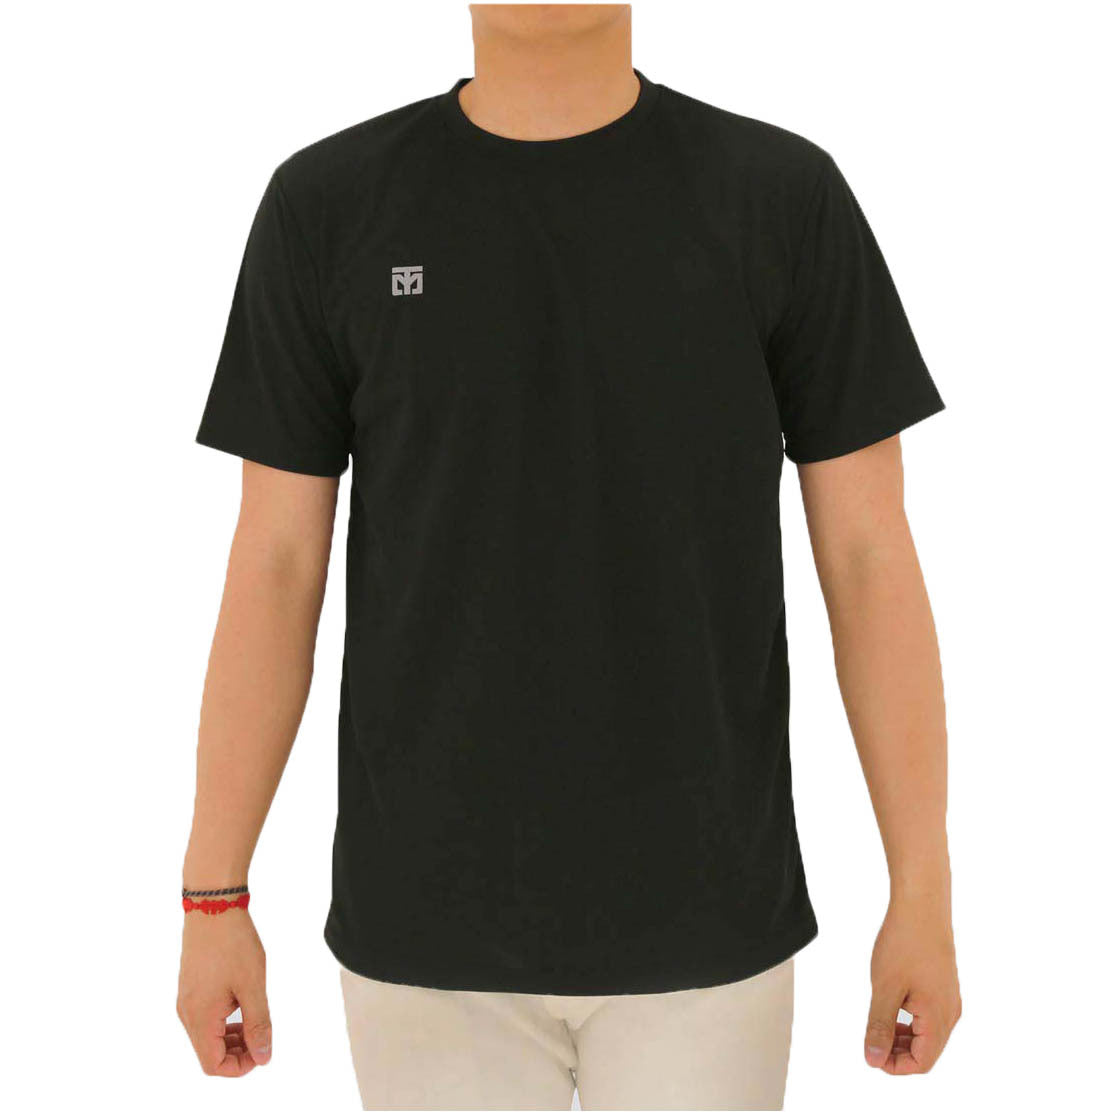 Mooto Cool Round Kids T-Shirt Black